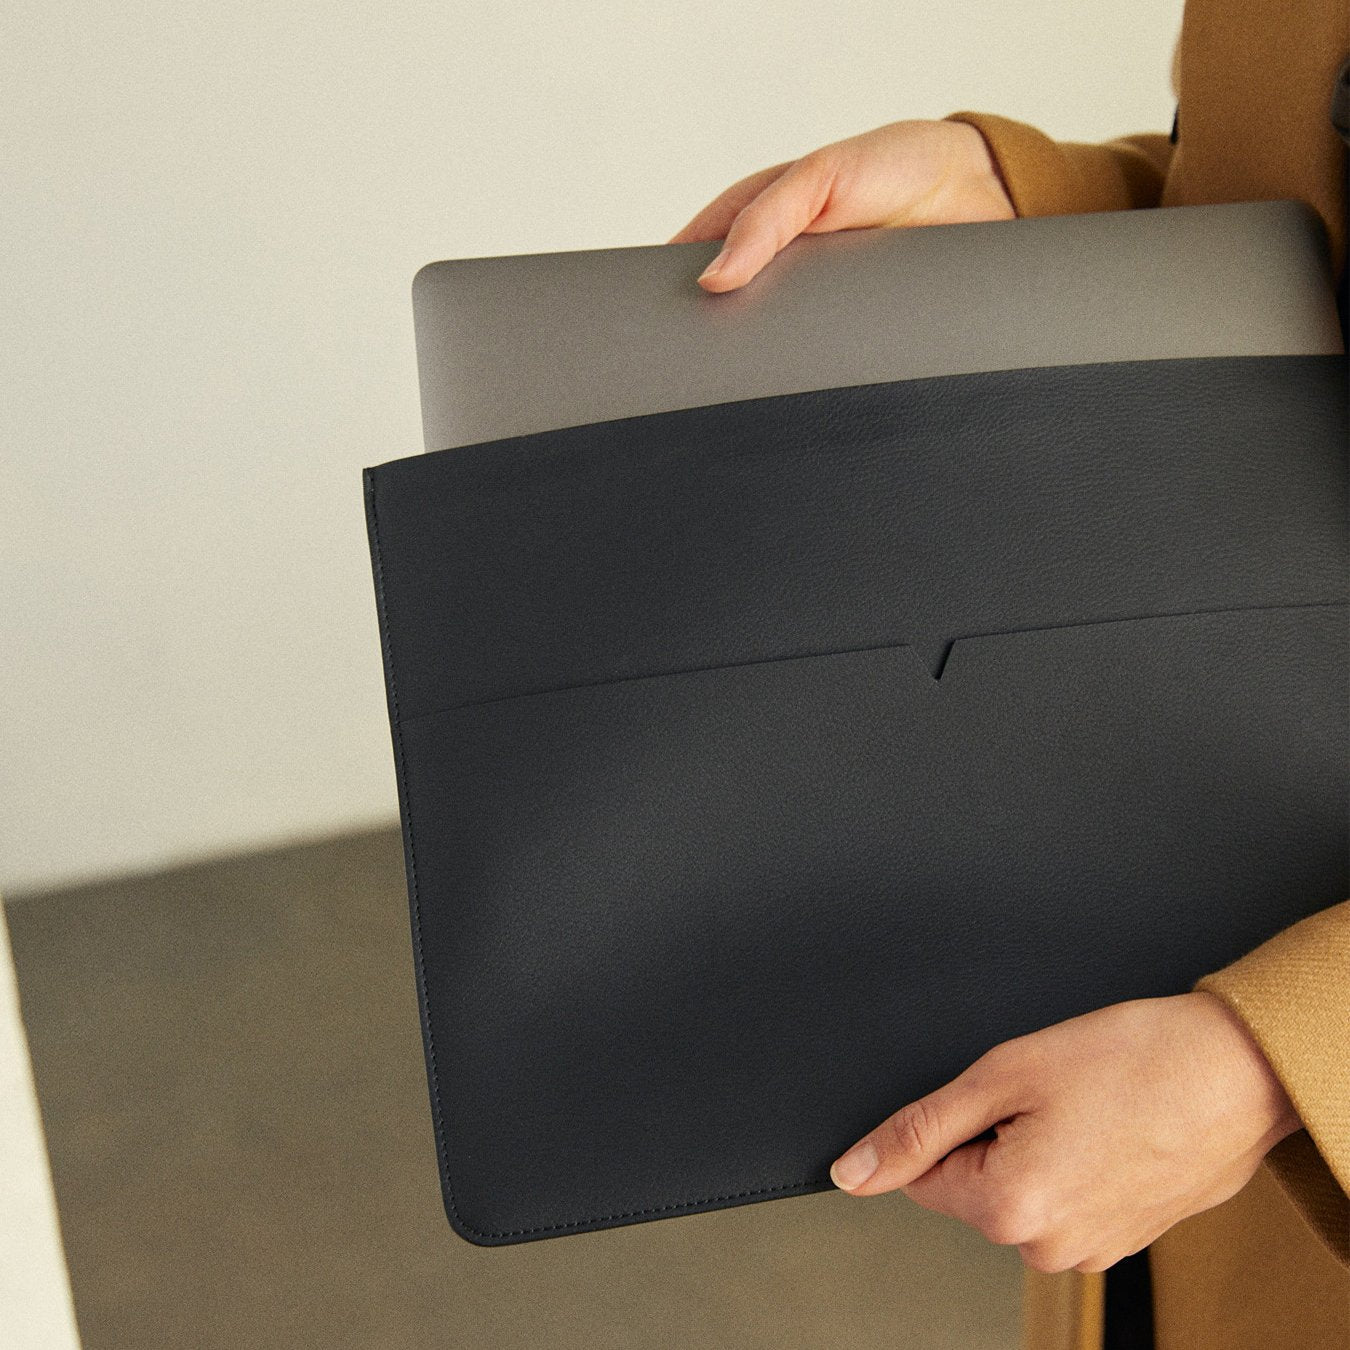 The MacBook Sleeve 13-inch - Sample Sale in Technik in Black image 2